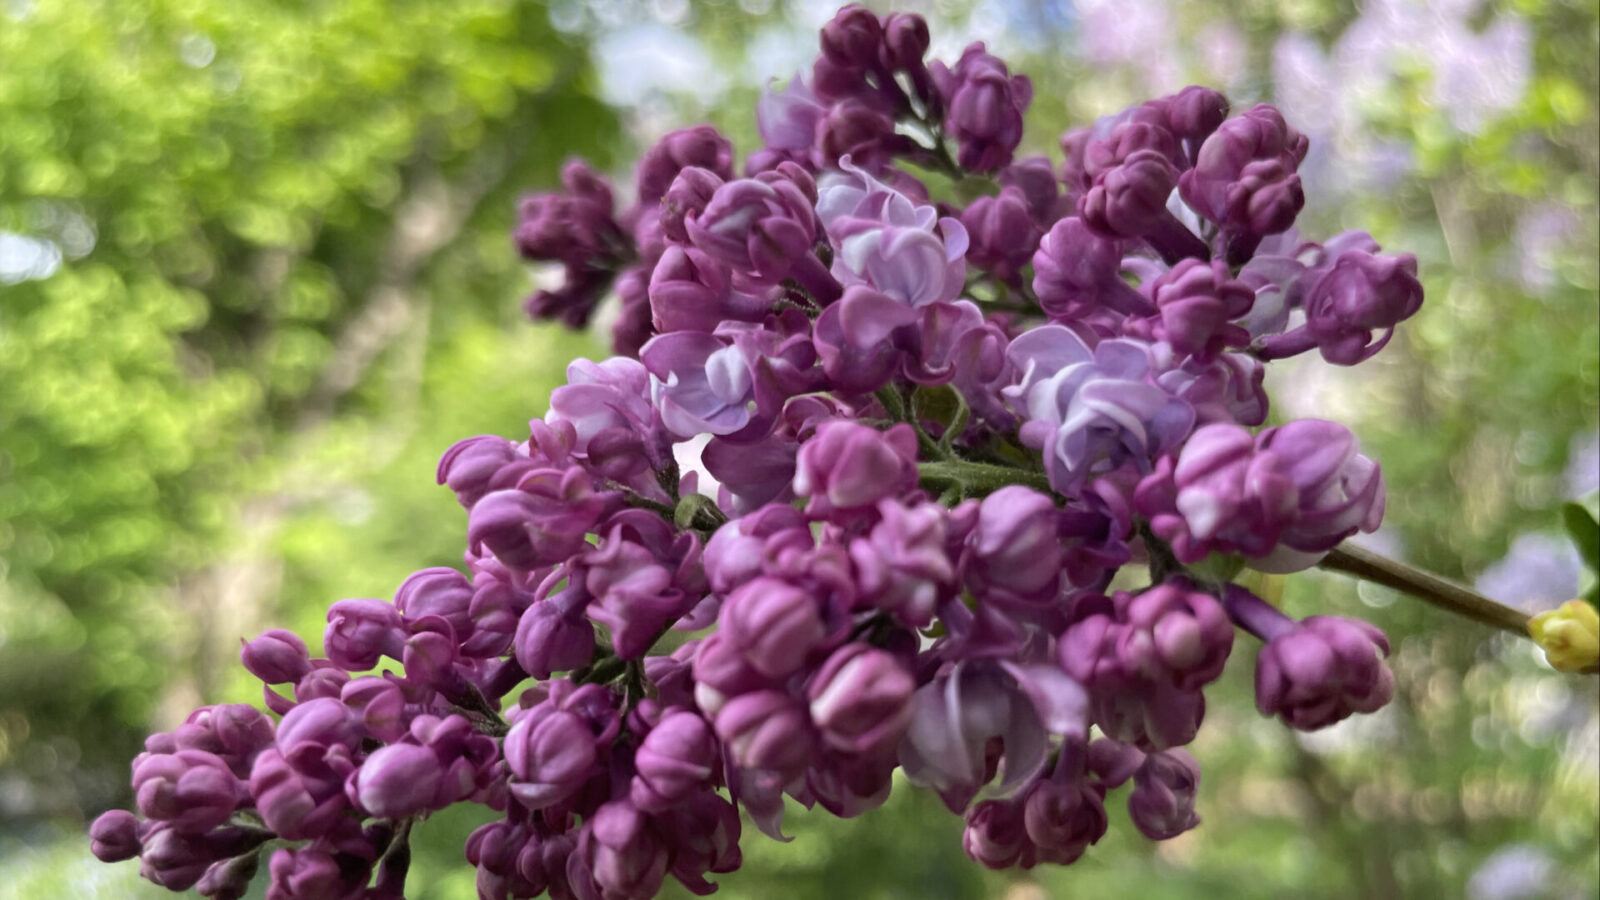 Lilacs bloom in Lilac Park in Lenox.